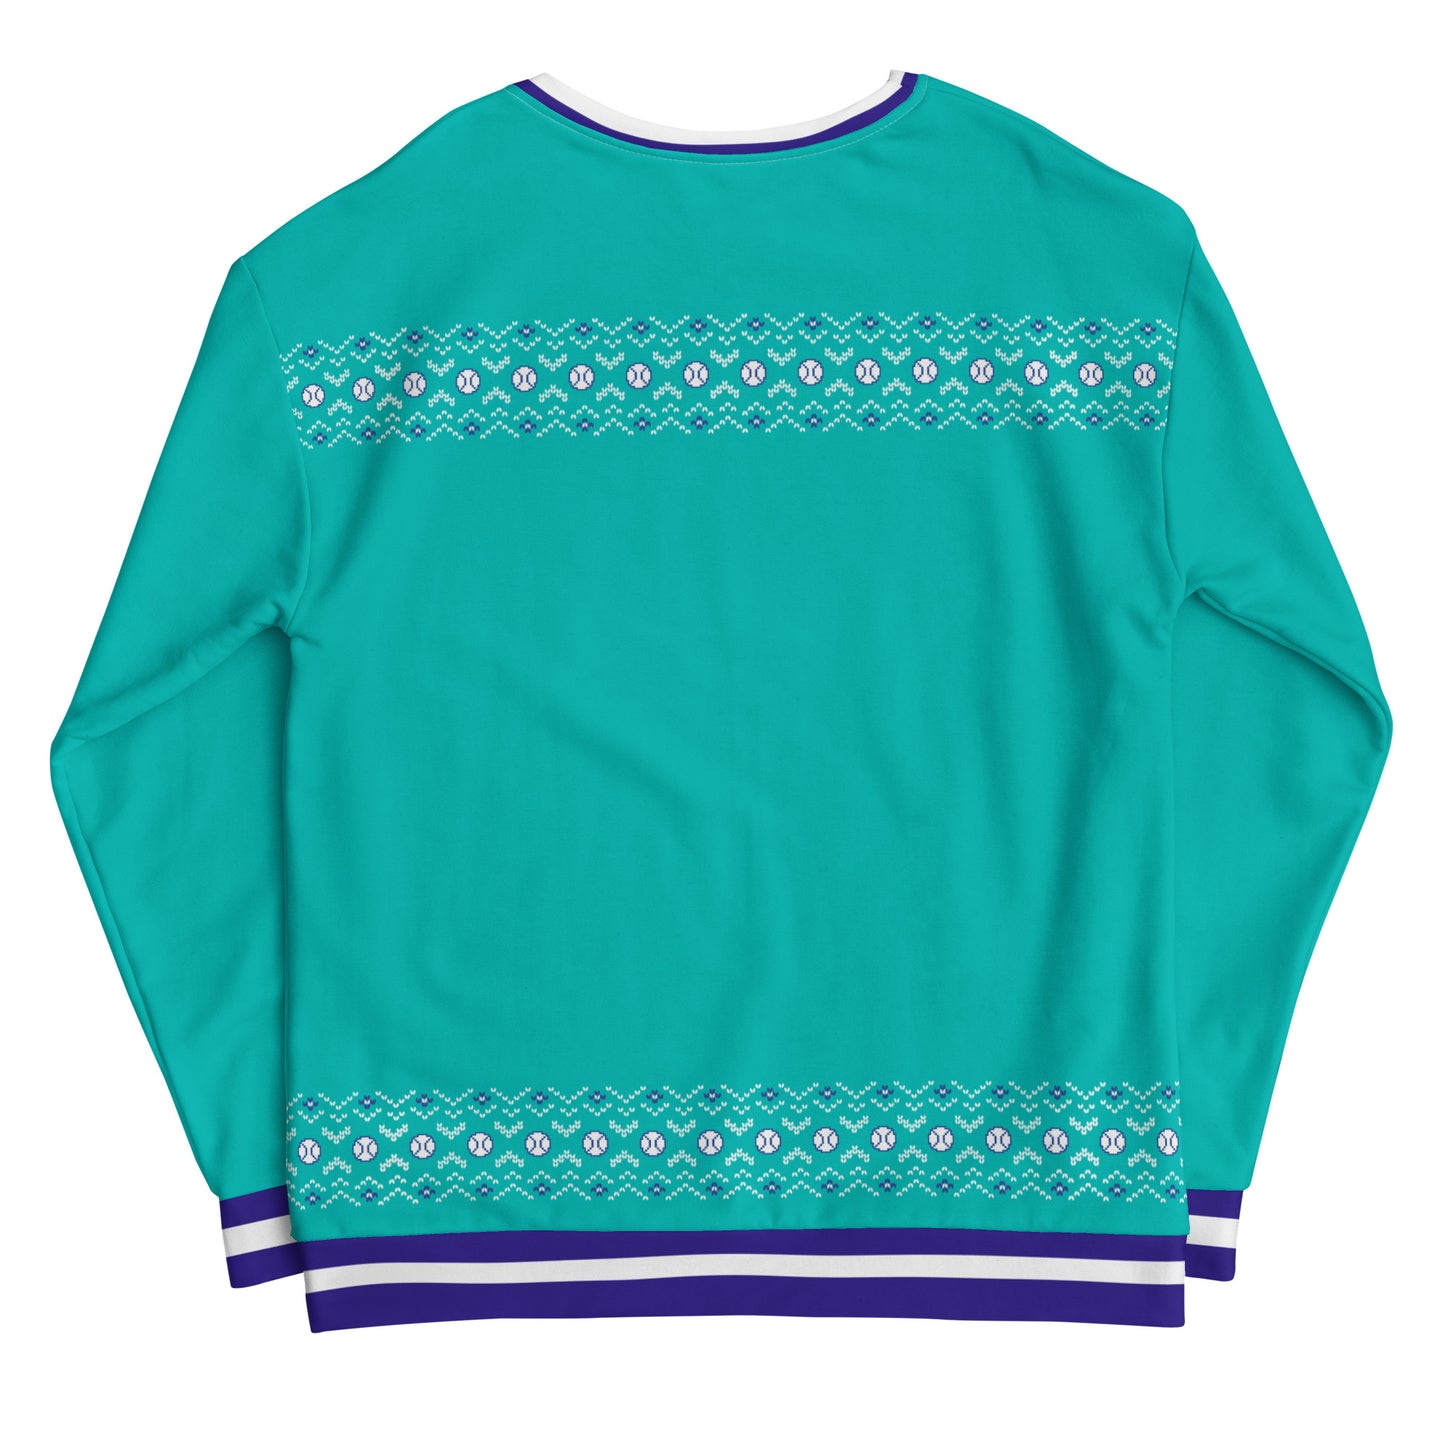 We Got Ice | Holiday Sweater